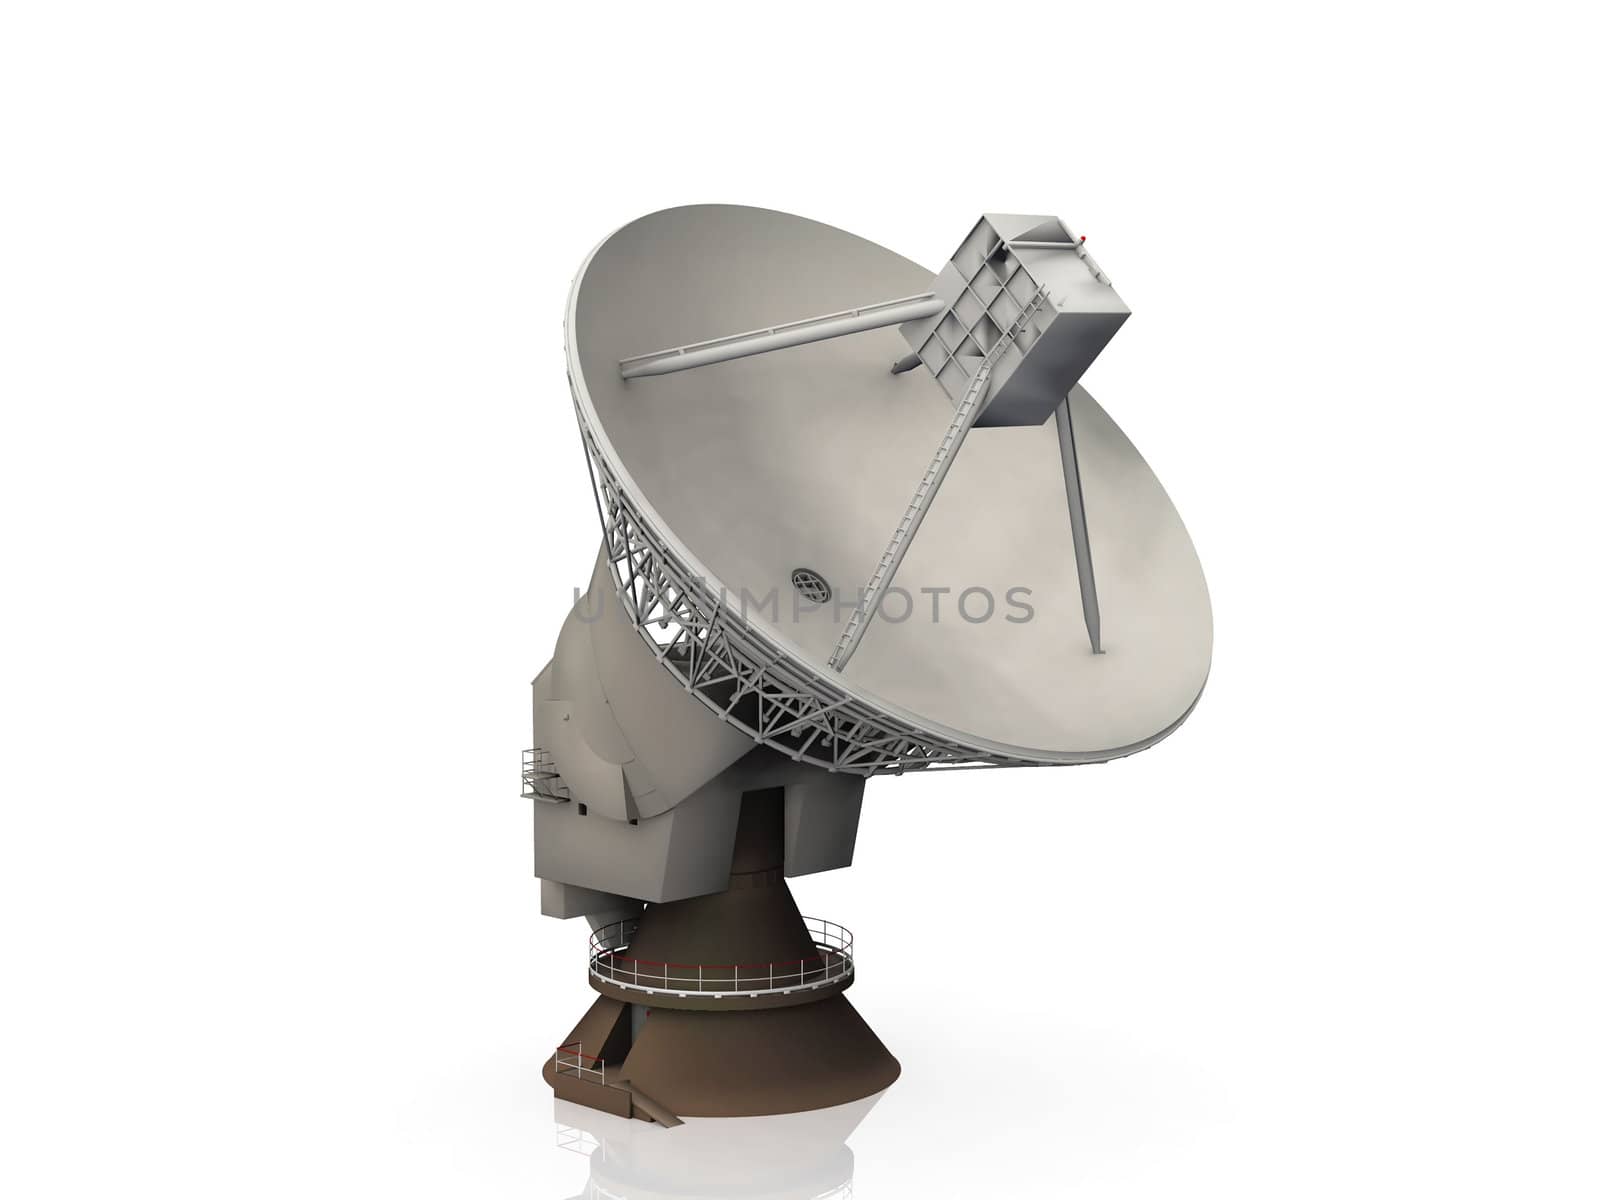 radio telescope on a white background